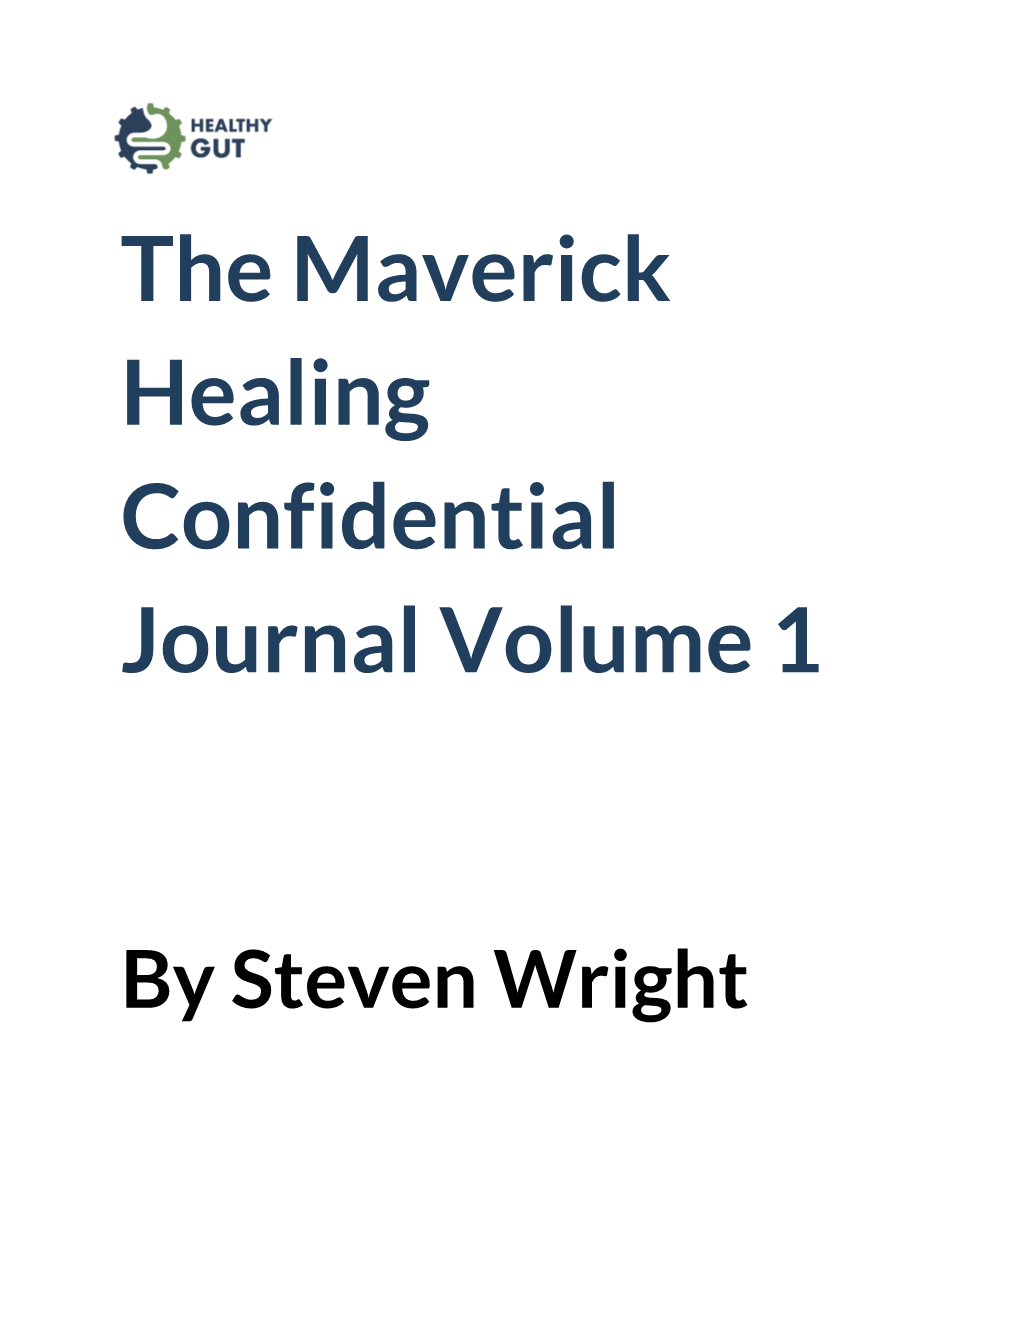 The Maverick Healing Confidential Journal Volume 1